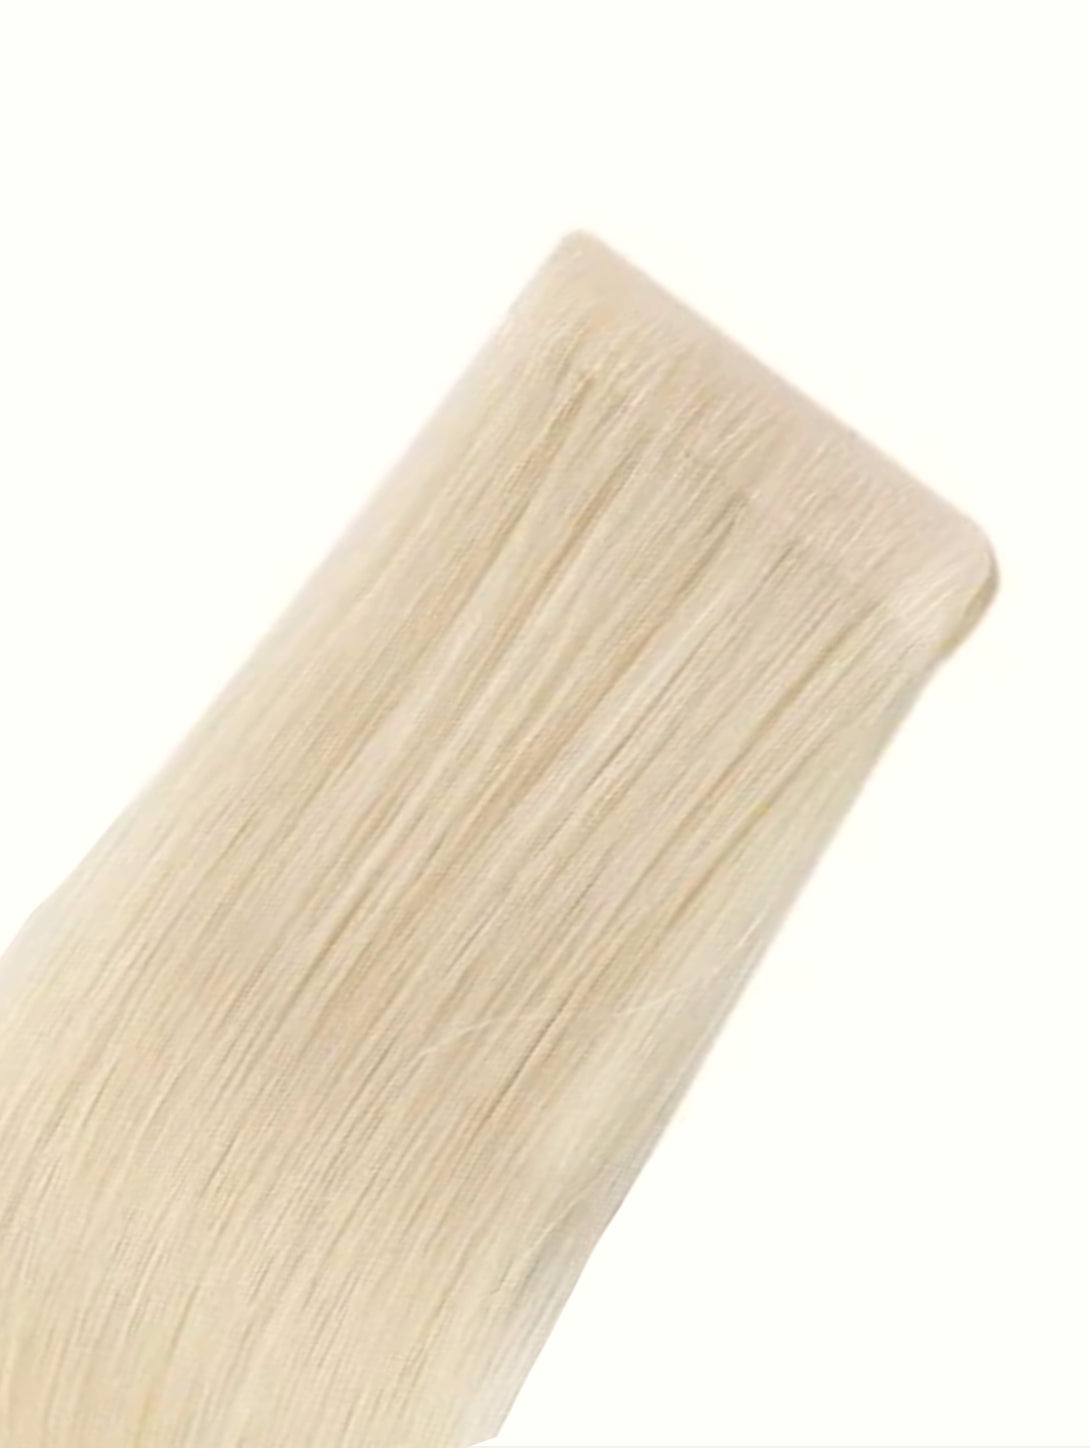 #Vanilla Blonde - Warm Medium Blonde Invisible Skin Weft Tape-In Hair Extensions